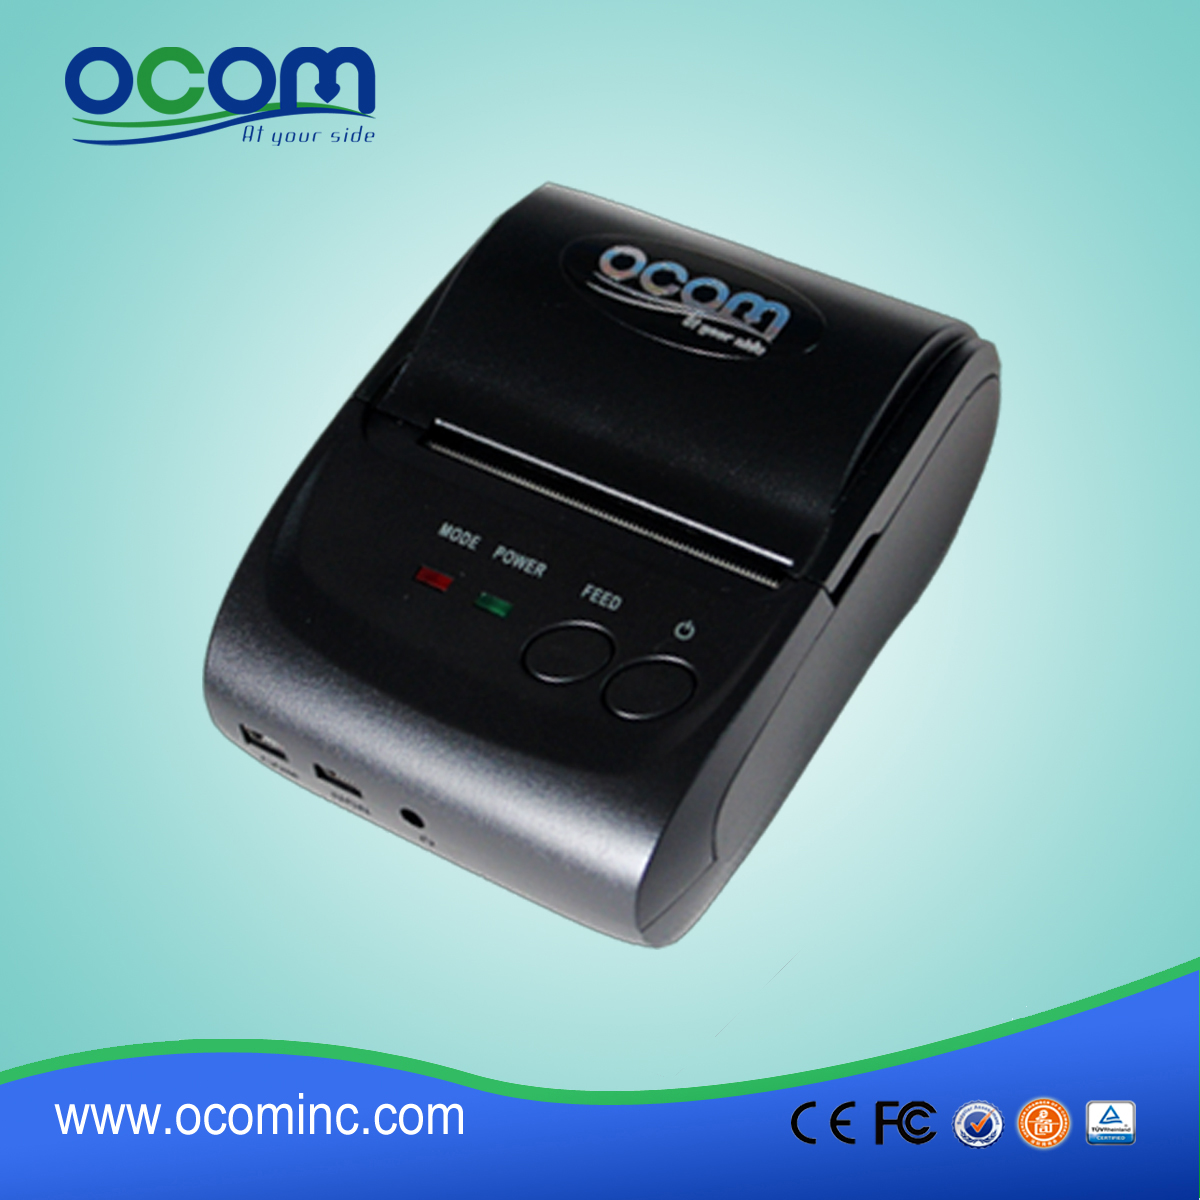 OCPP-M05 58mm Portable Thermal Receipt Printer